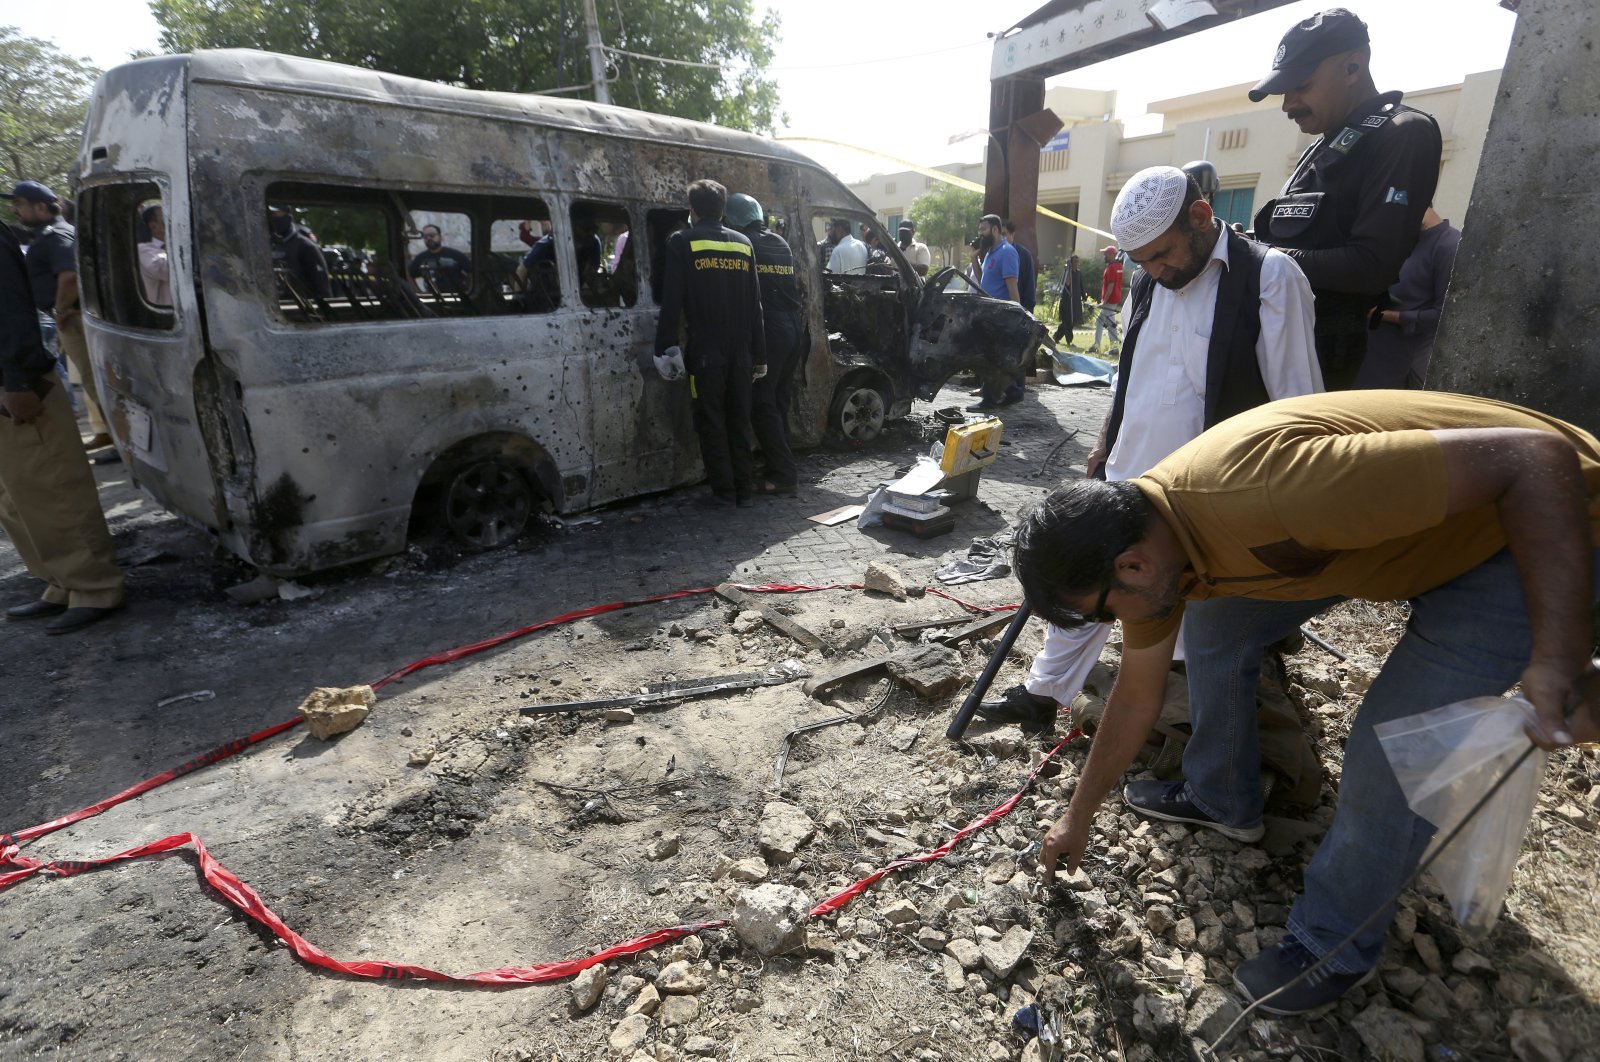 Pakistani investigators gather evidence at the site of an explosion in Karachi, Pakistan, April 26, 2022. (AP Photo)